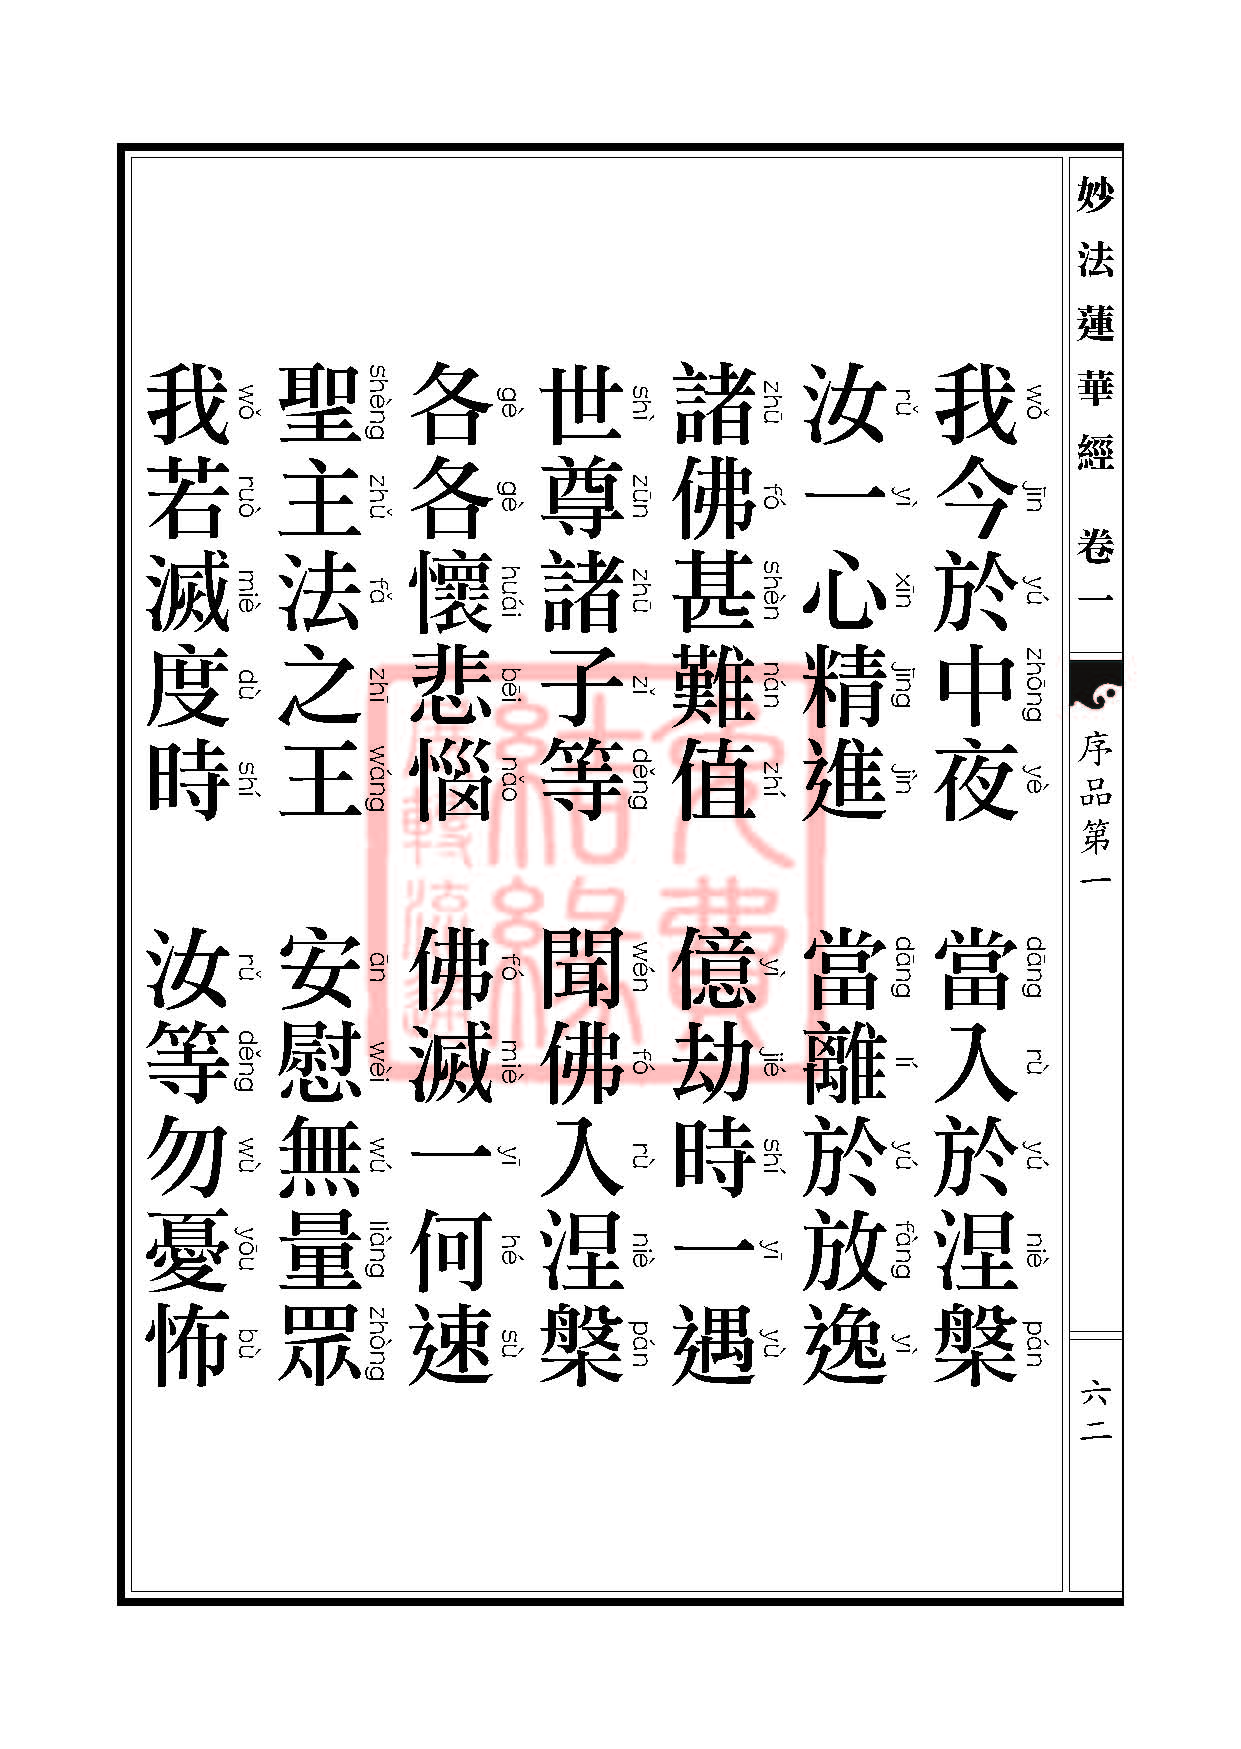 Book_FHJ_HK-A6-PY_Web_页面_062.jpg